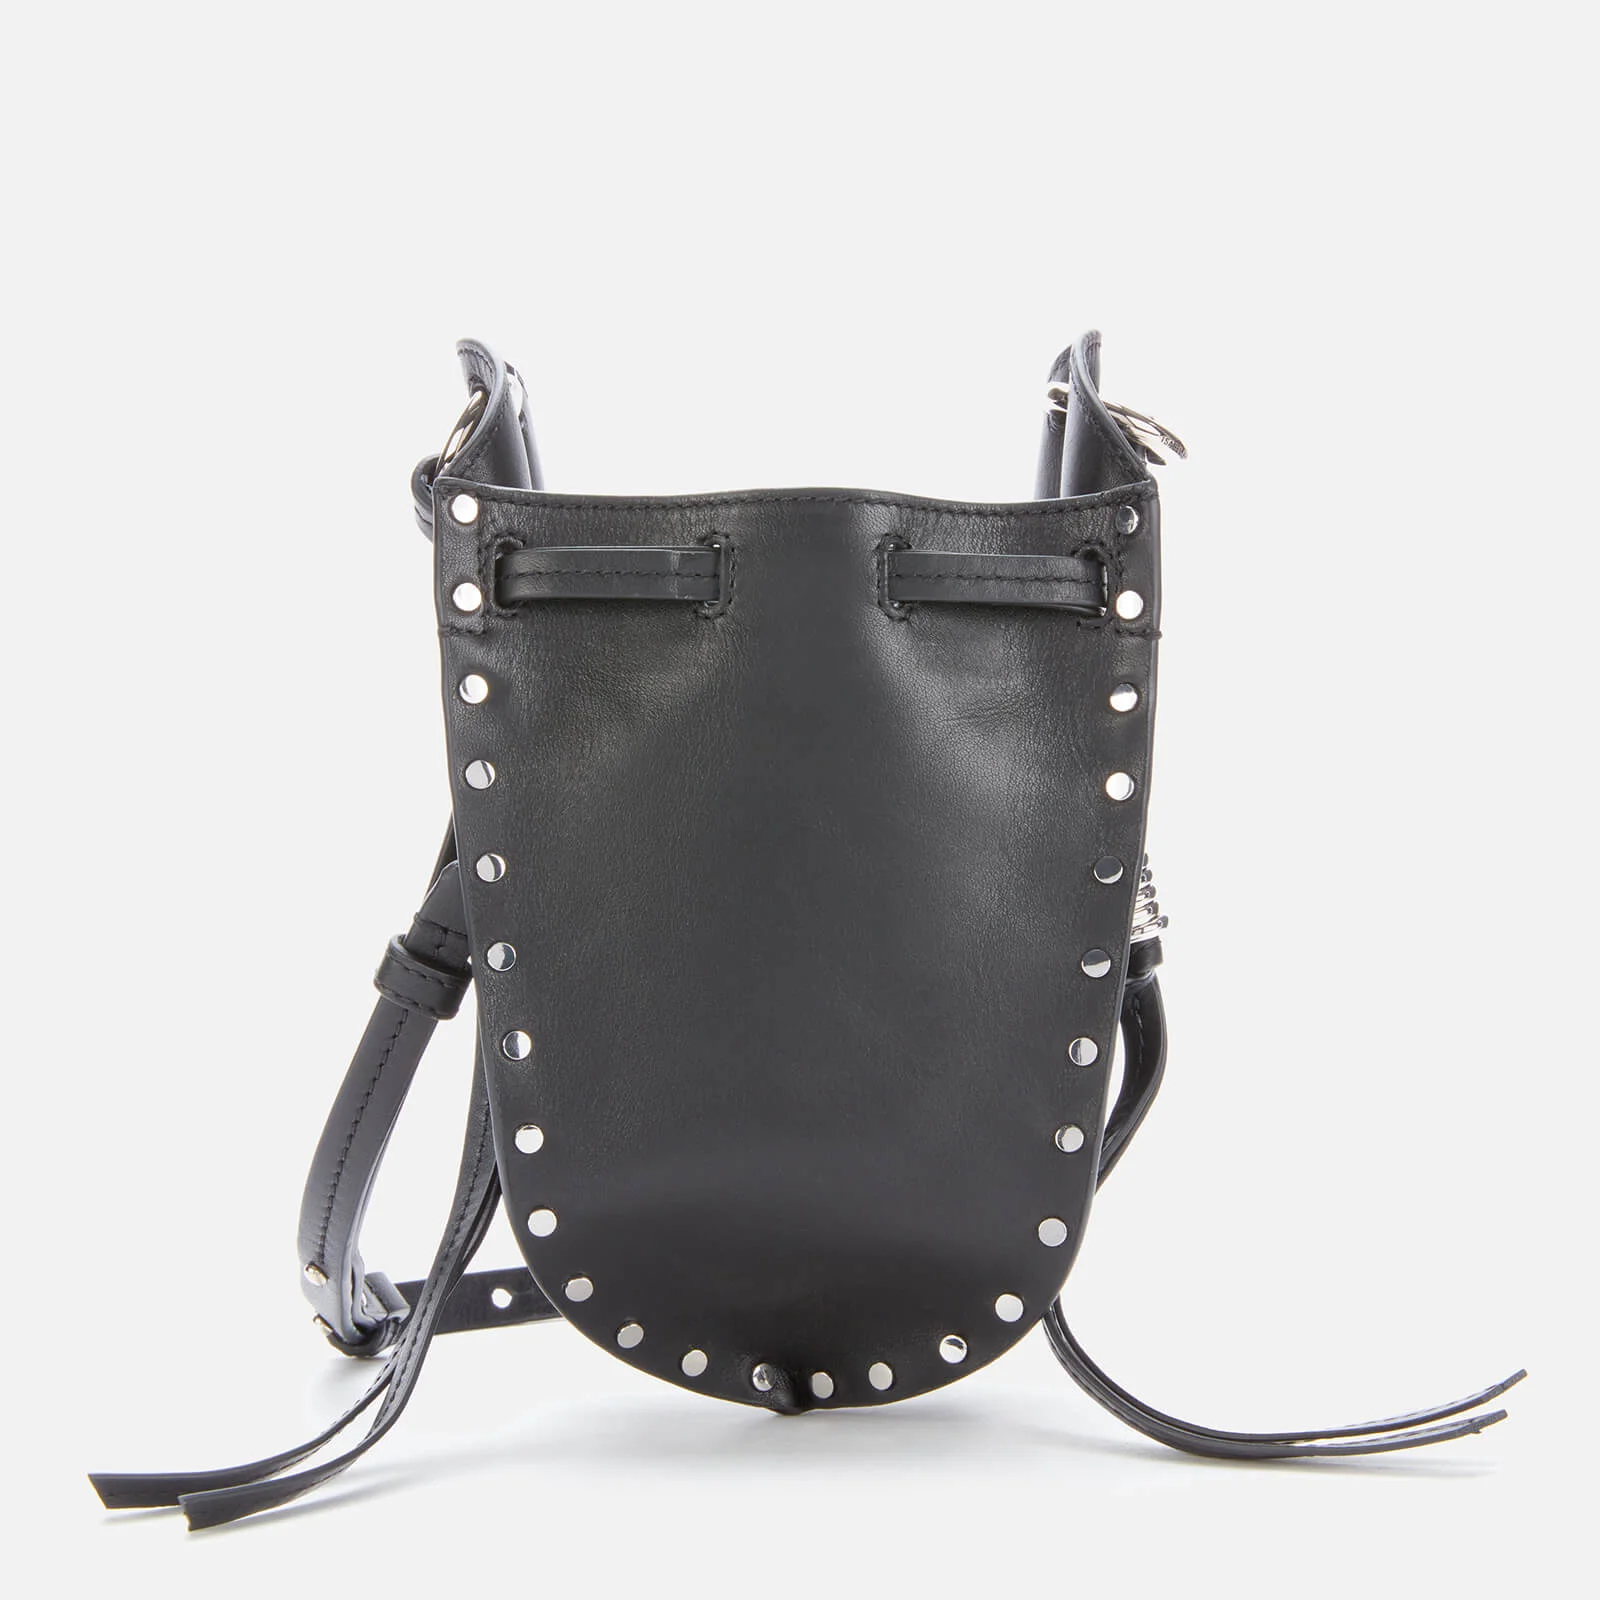 Isabel Marant Women's Radji Leather Ja Bag - Black/Silver Image 1